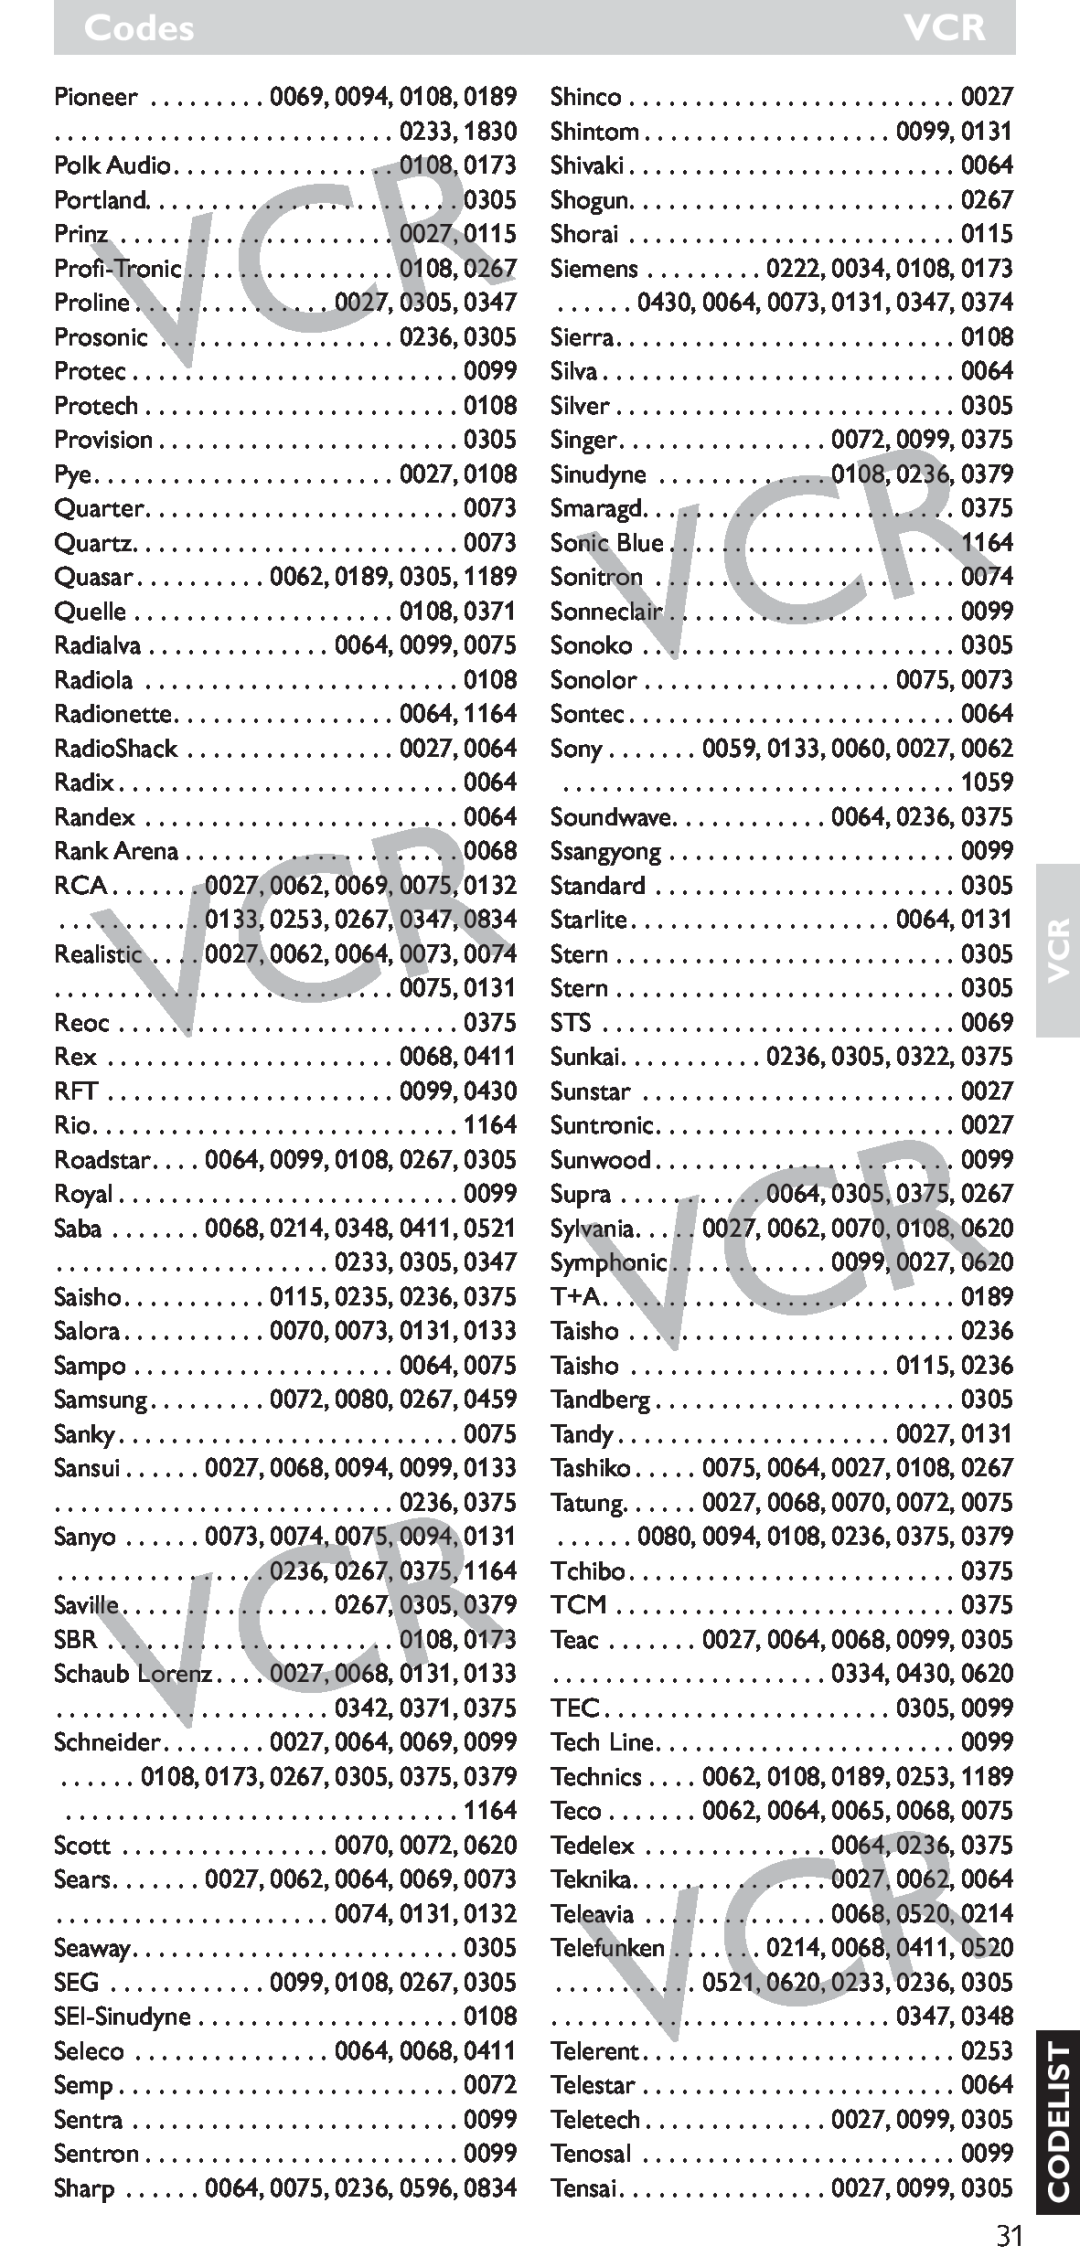 Hitachi SRU 5040/05 manual Codes, Vcr Codelist 